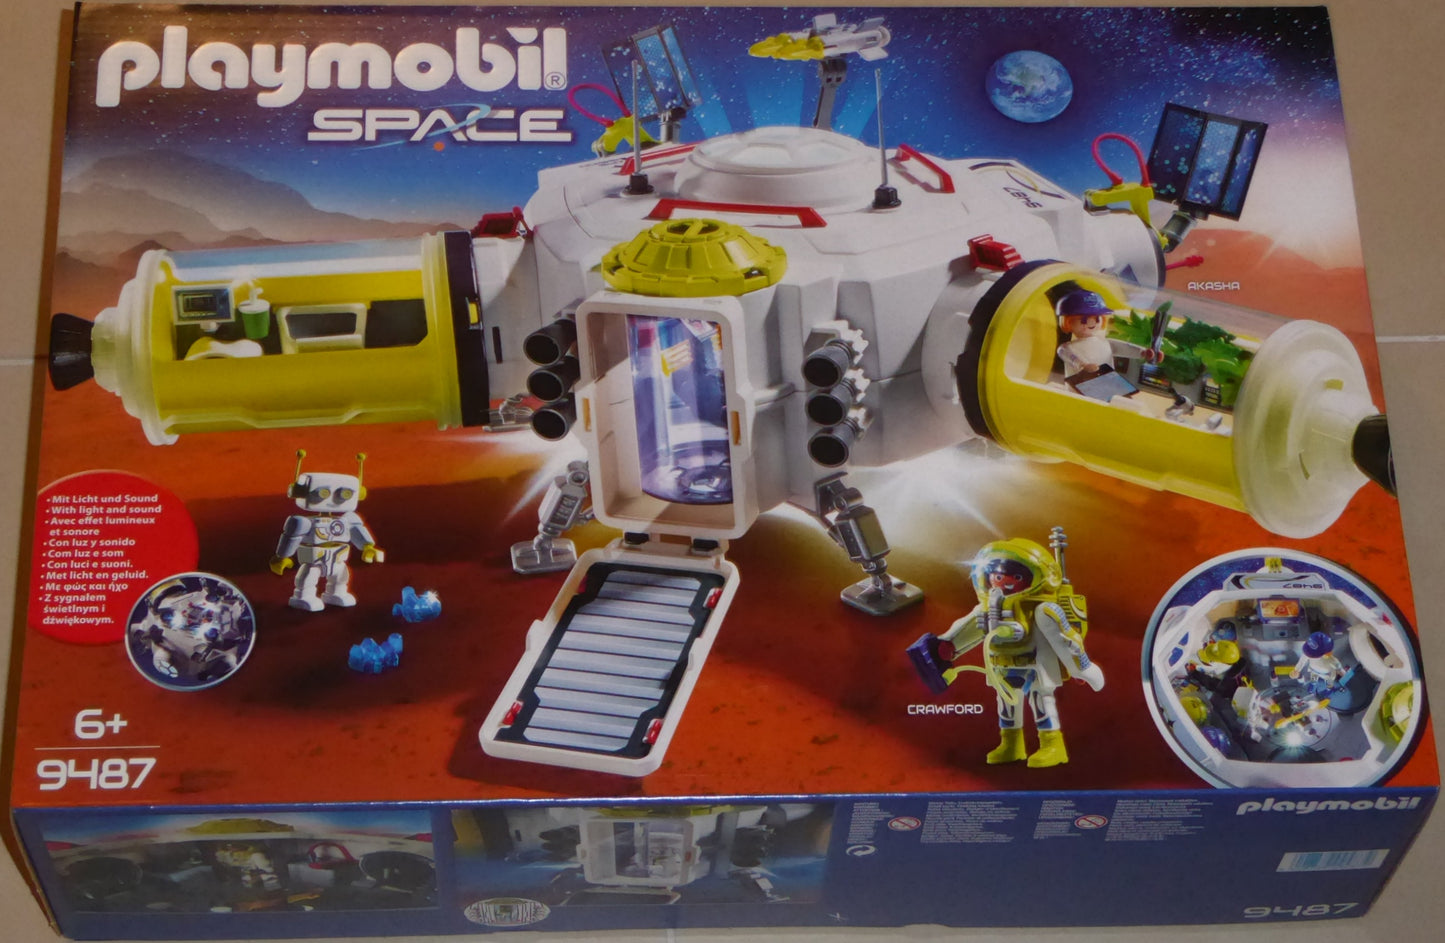 Playmobil 9487 Mars-Station